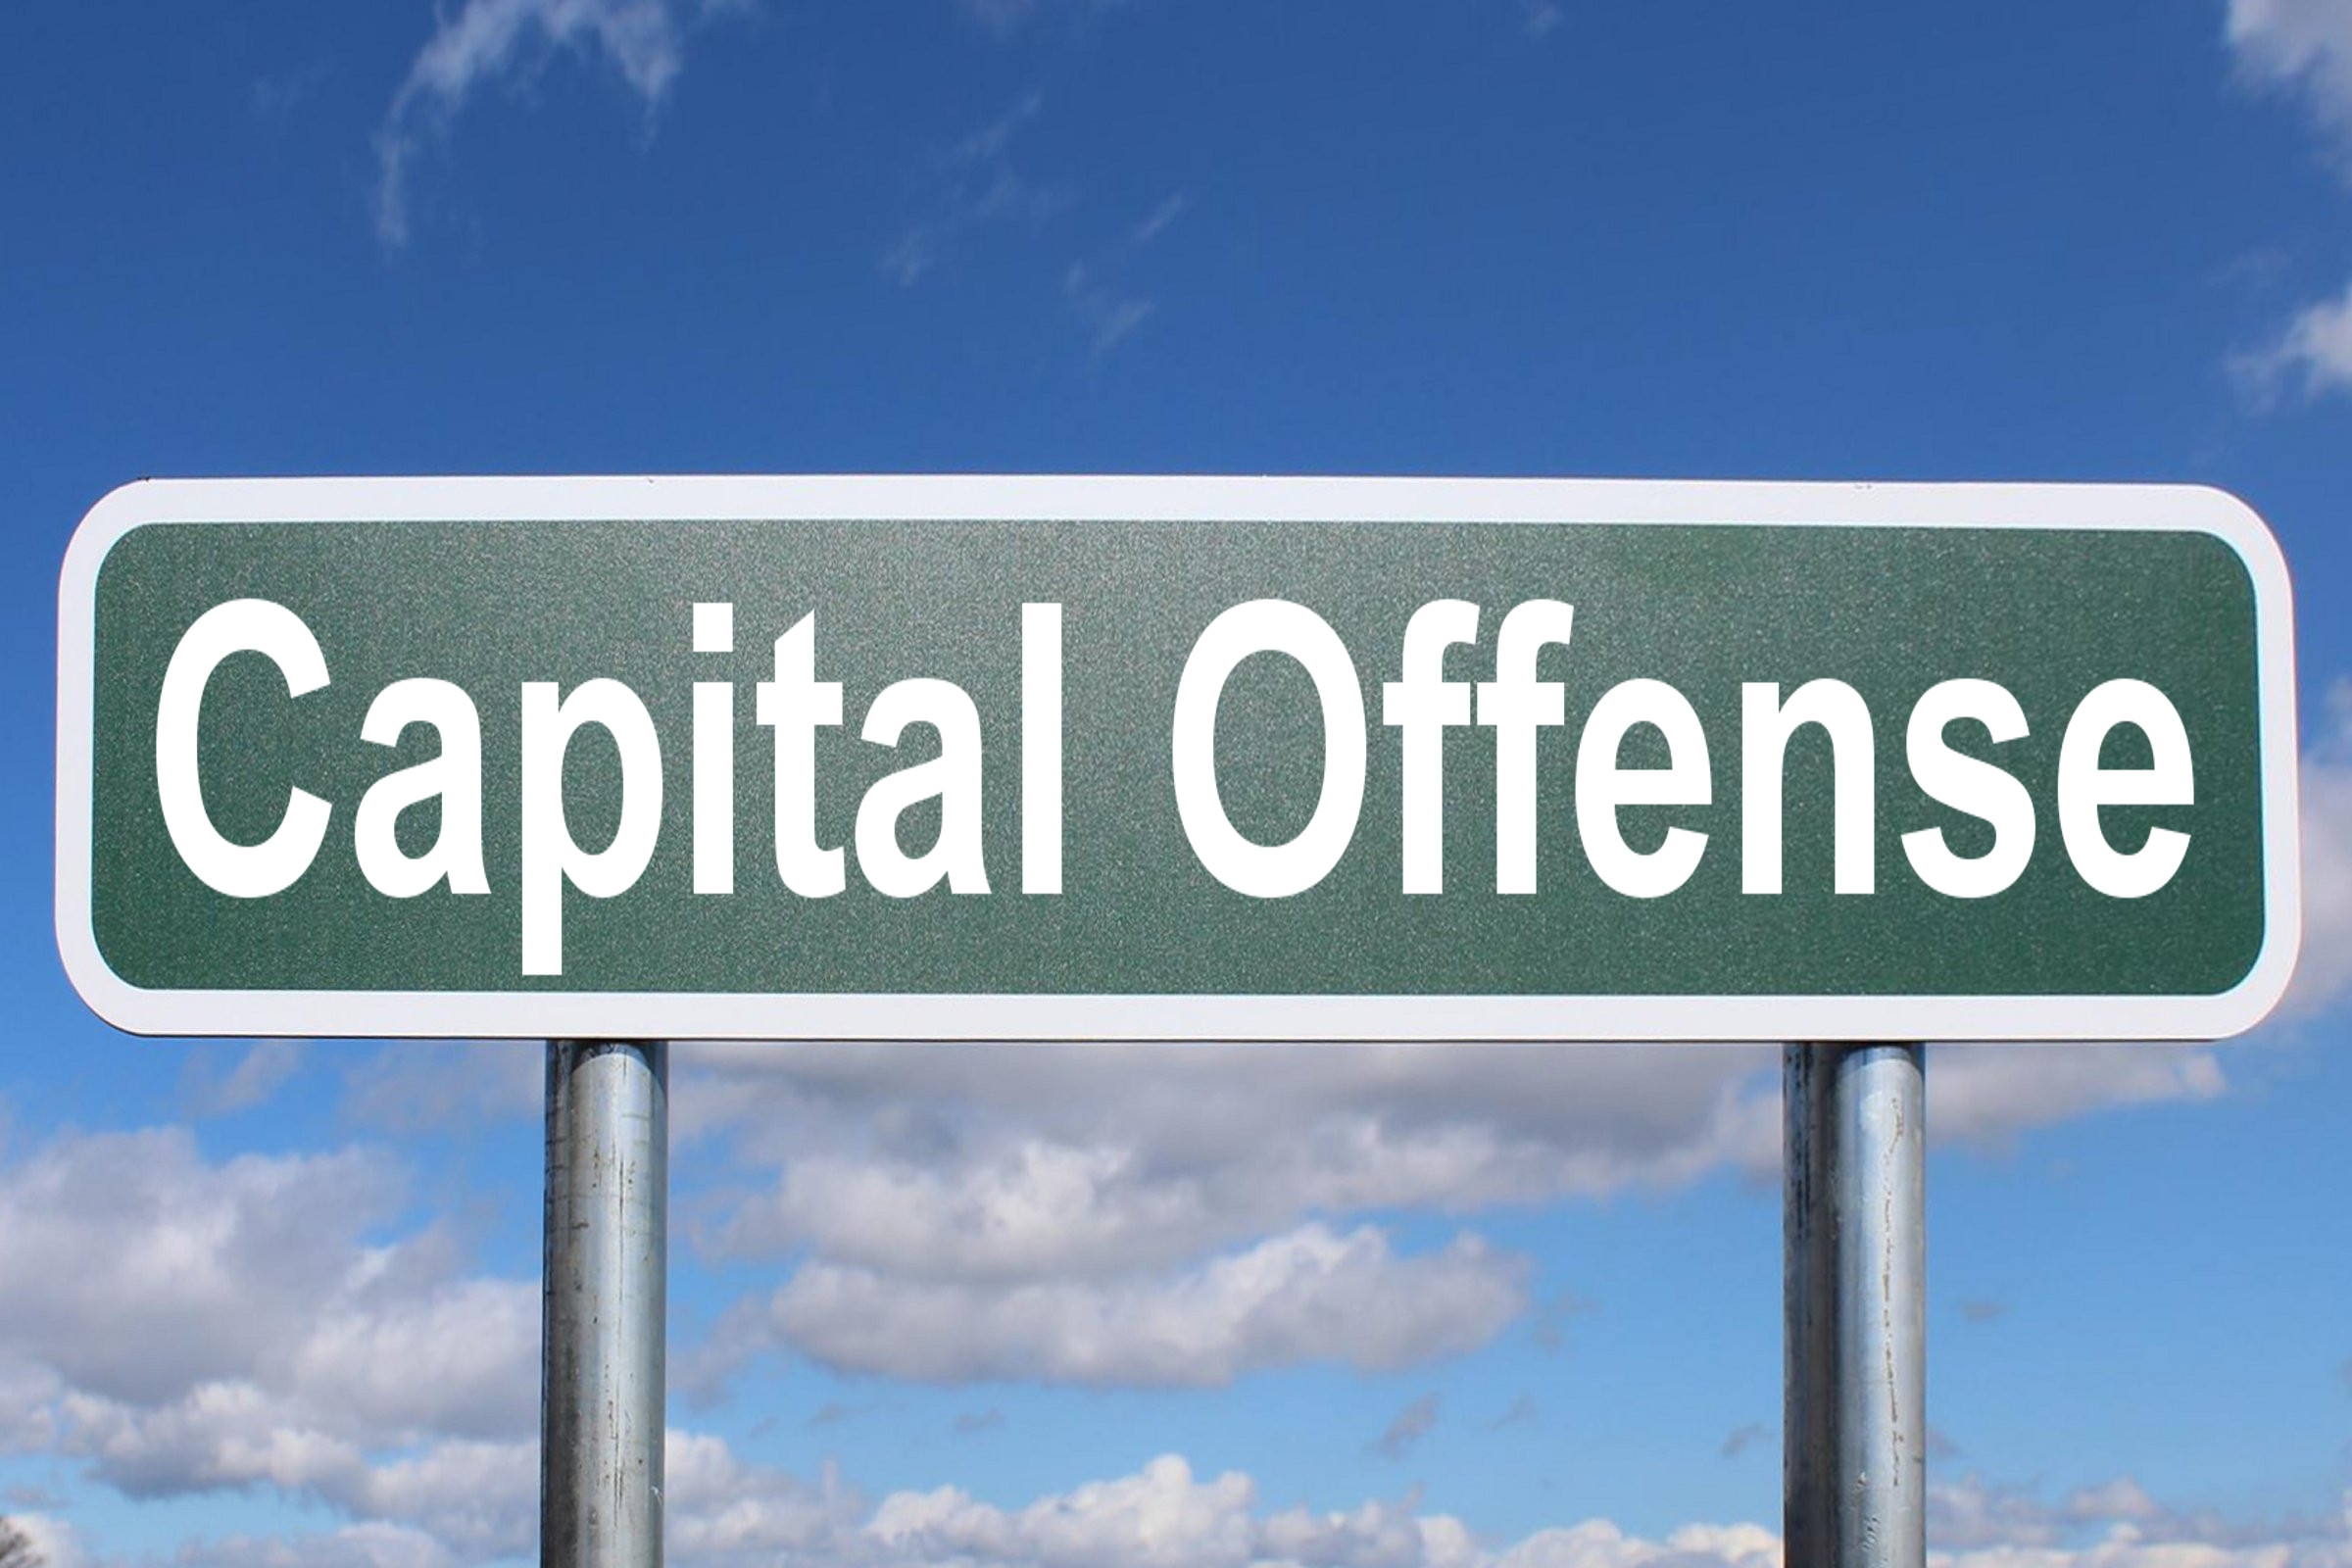 capital offense